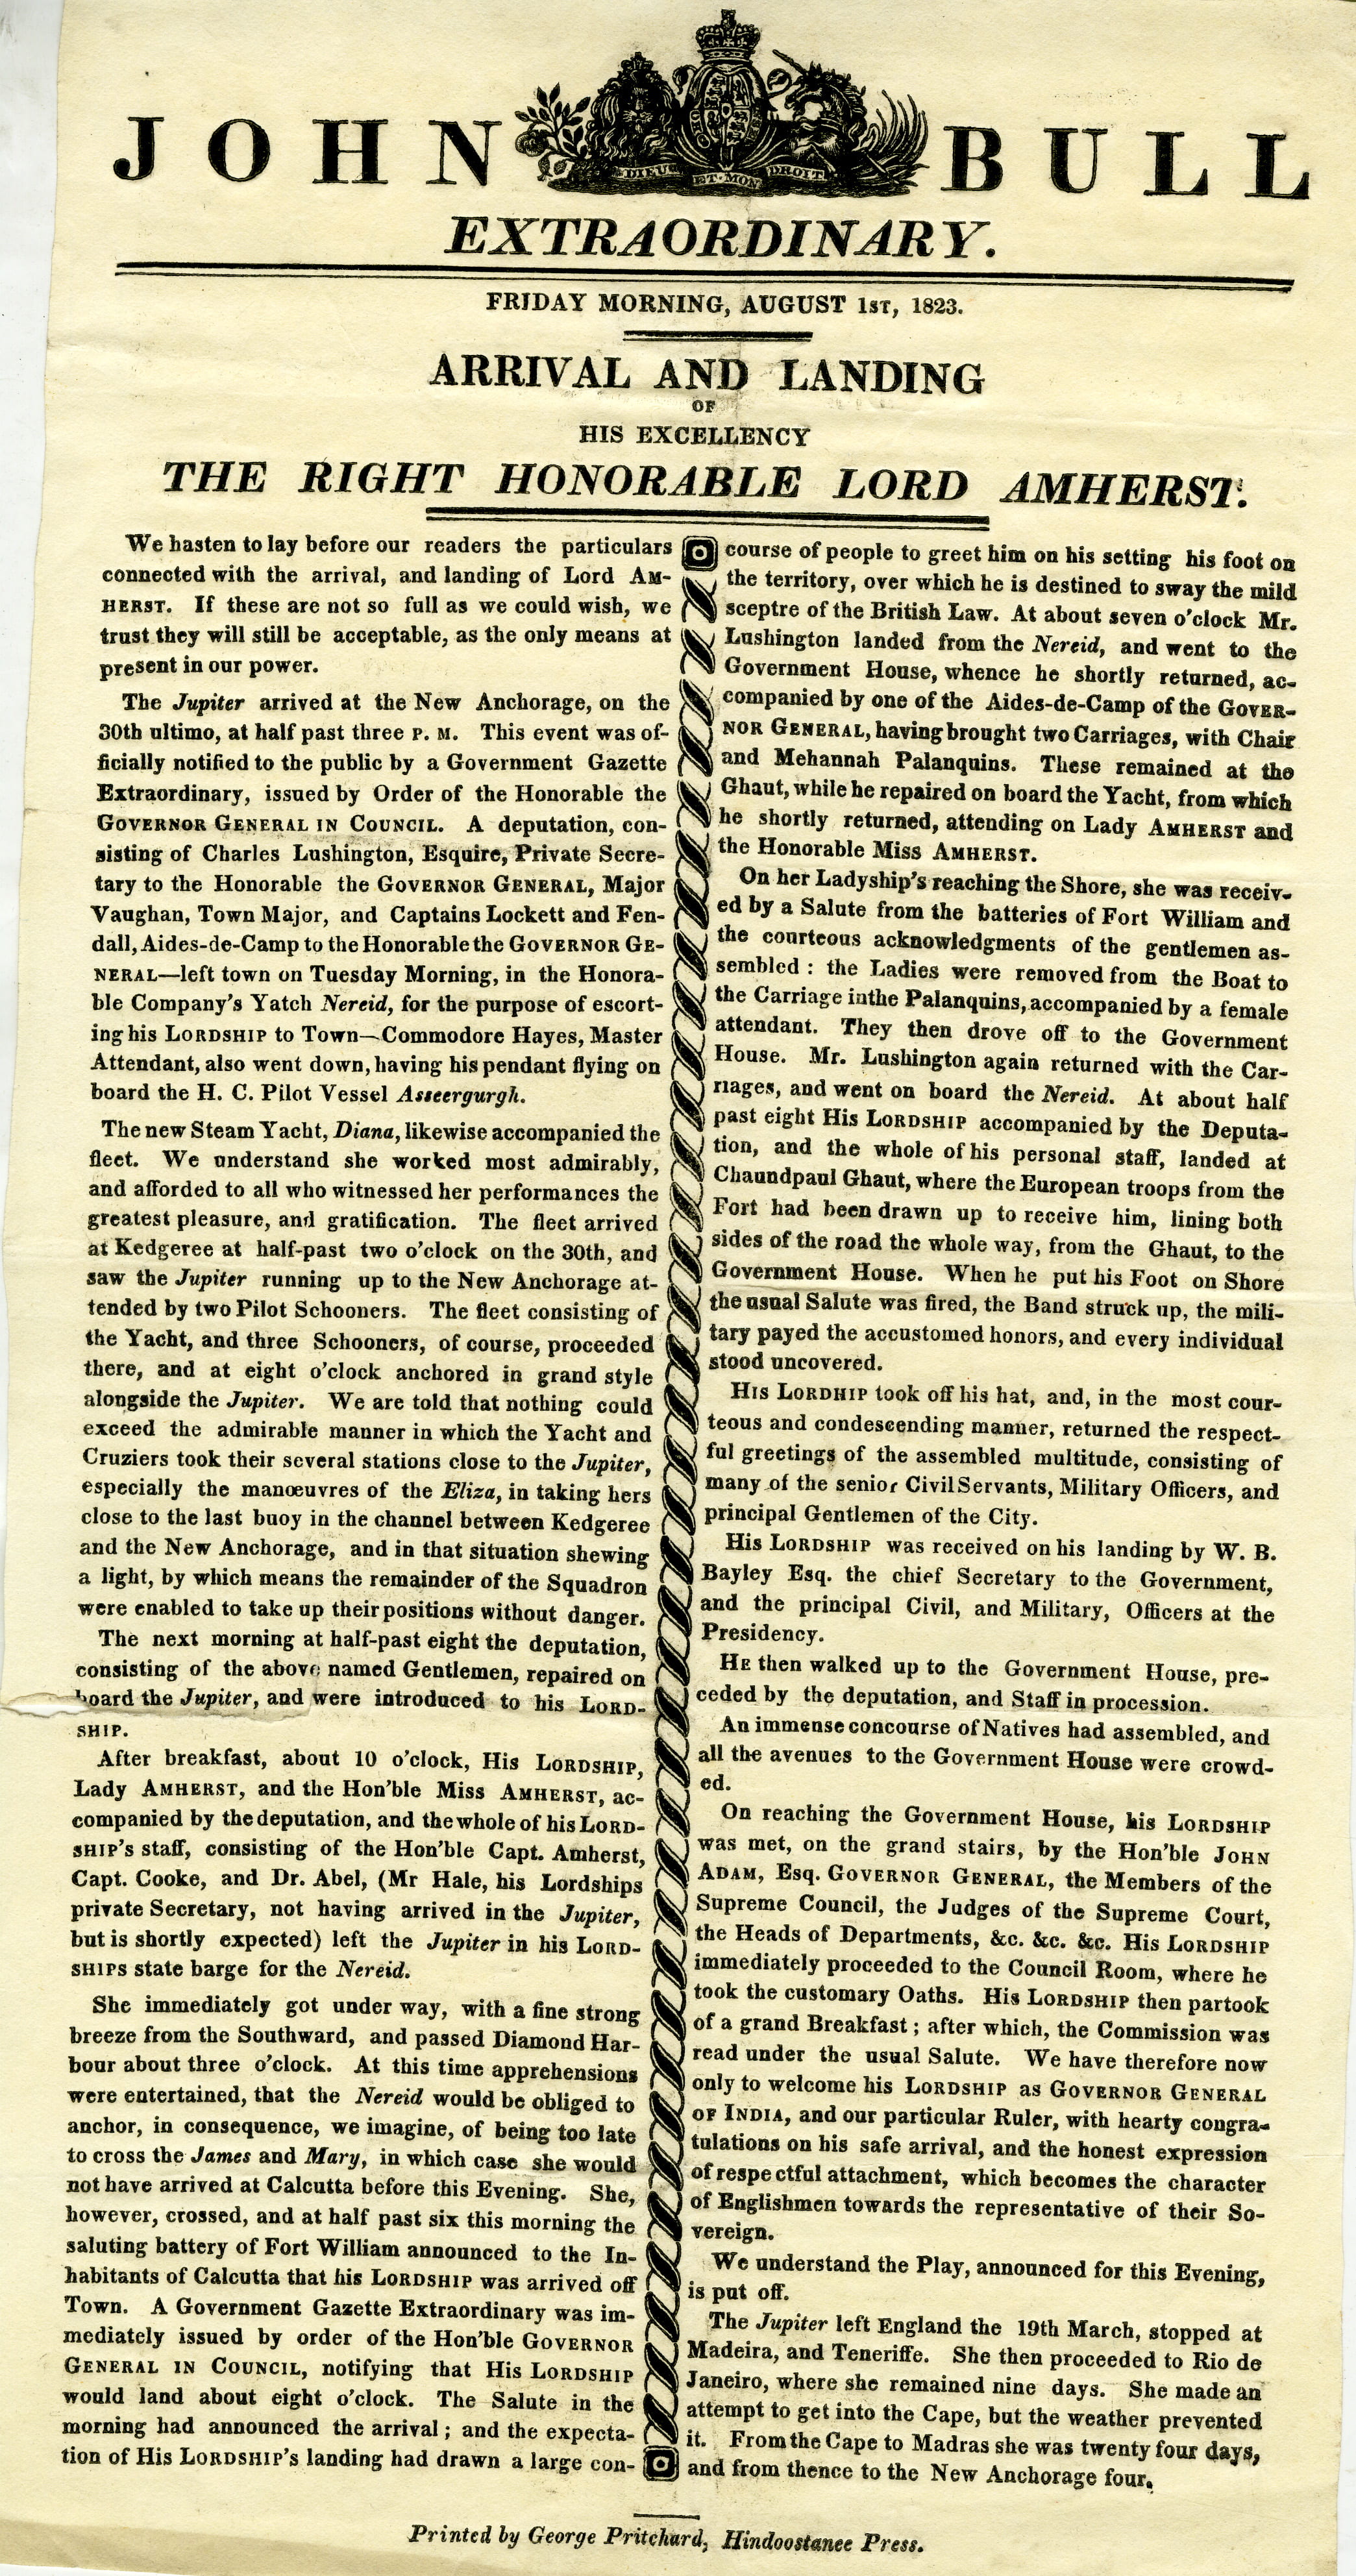 John Bull Extraordinary. George Pritchard, Hindoostanee Press, 1 August 1823.